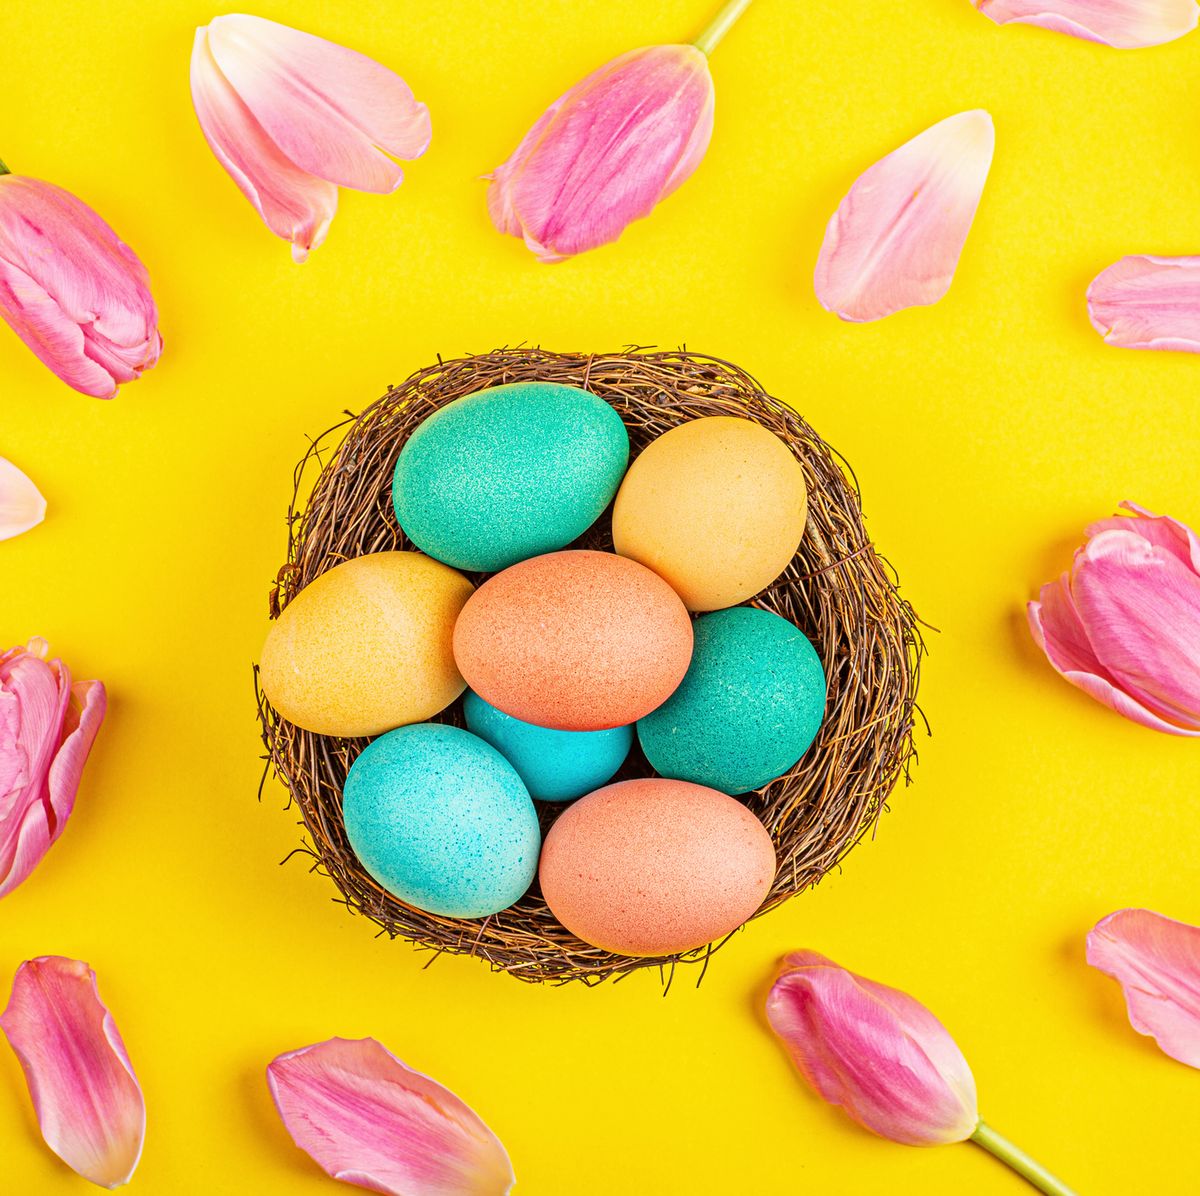 A Basket of Pop Culture Easter Eggs